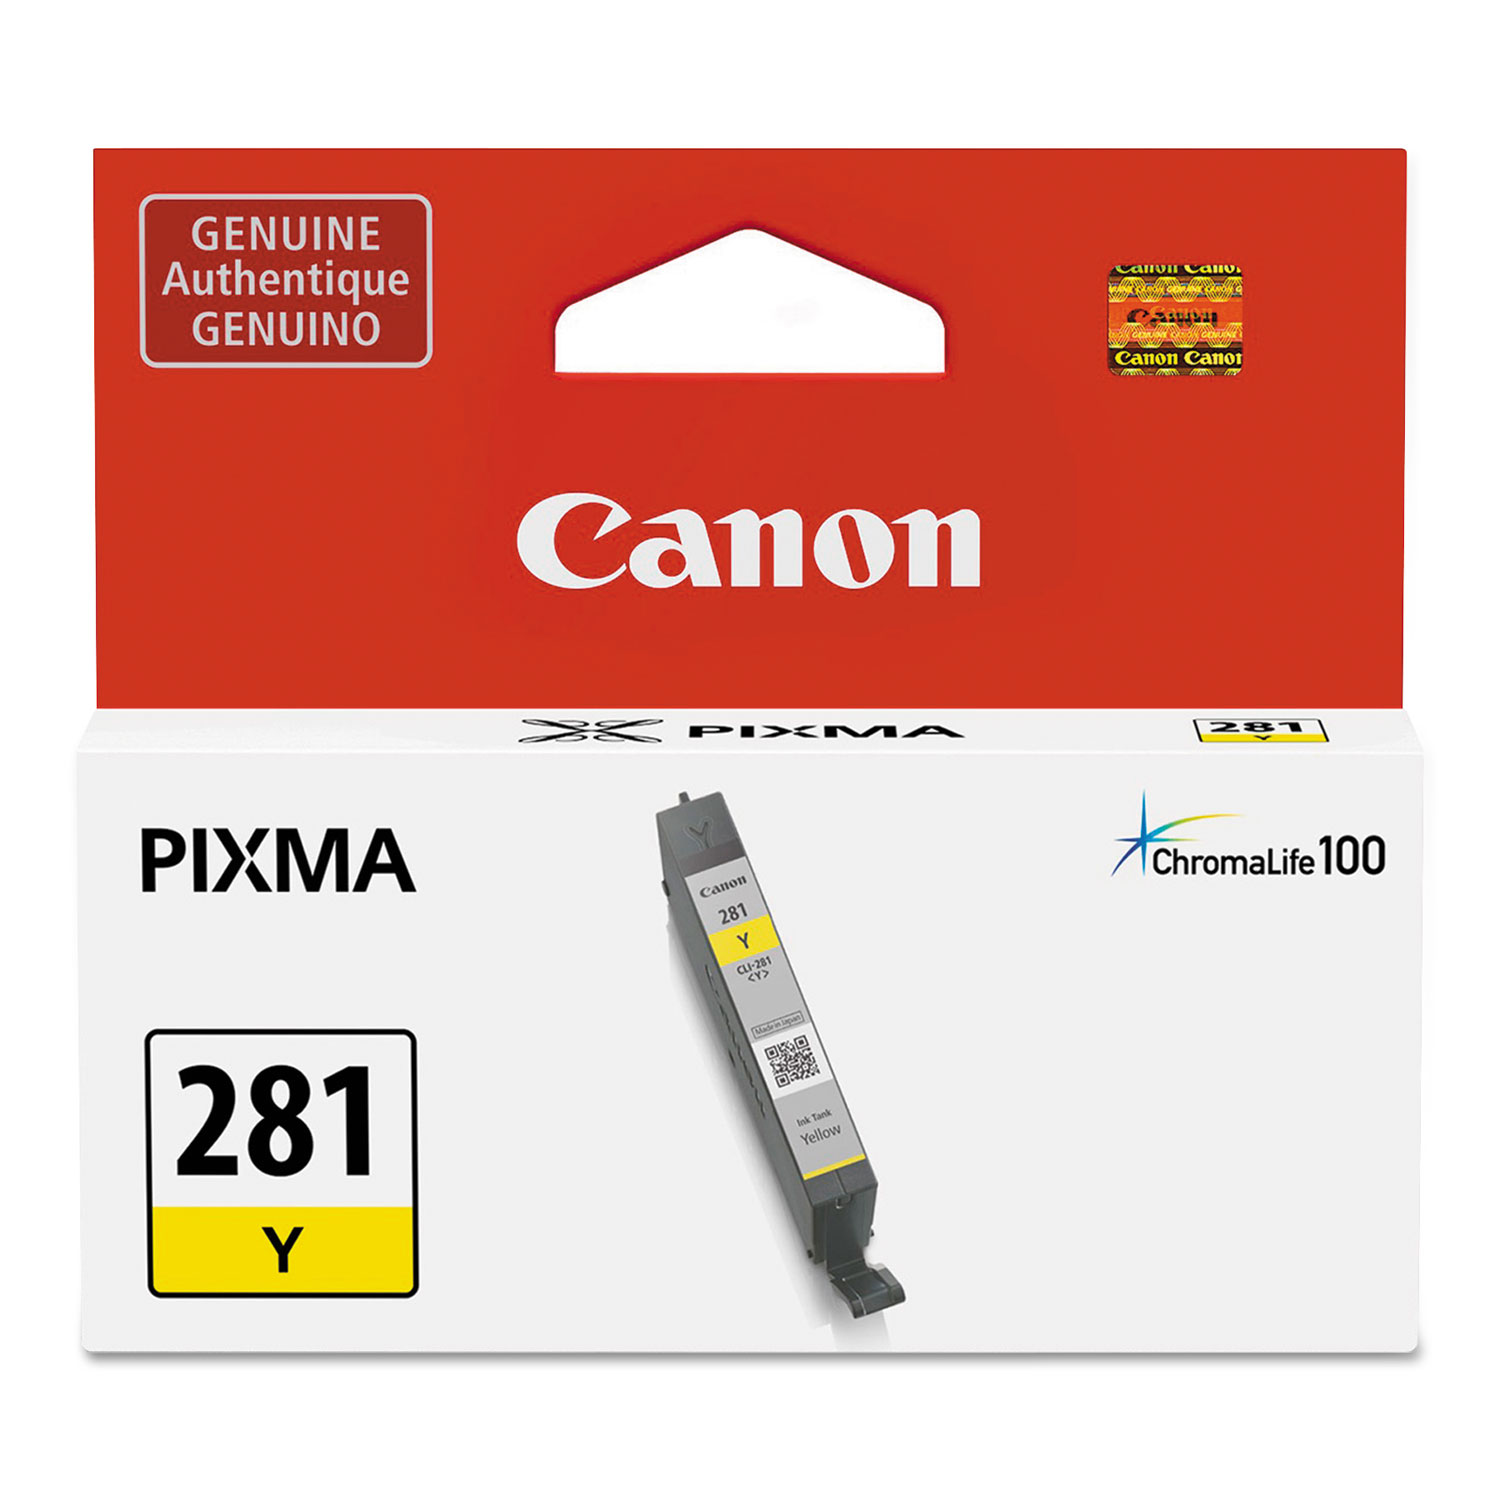  Canon 2090C001 2090C001 (CLI-281) ChromaLife100+ Ink, 259 Page-Yield, Yellow (CNM2090C001) 